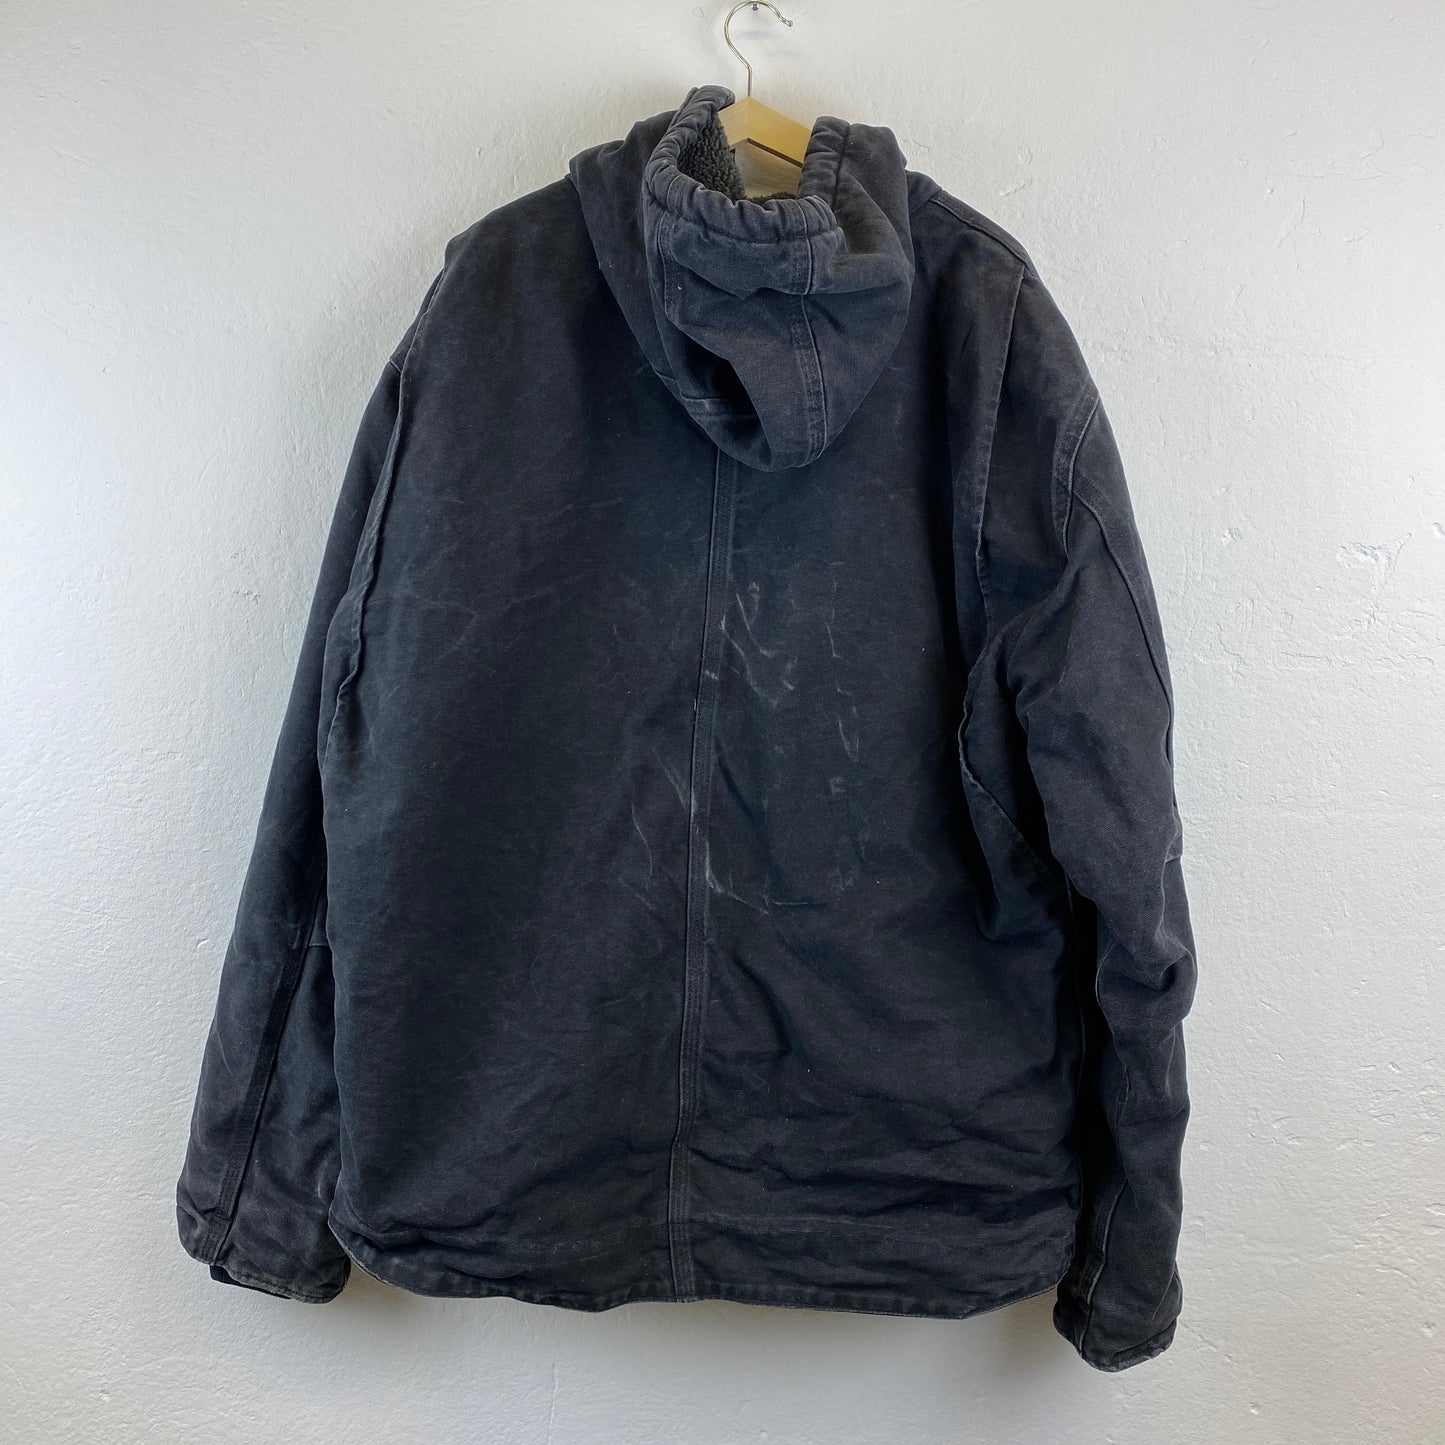 Carhartt distressed washed heavyweight detroit jacket (XL)